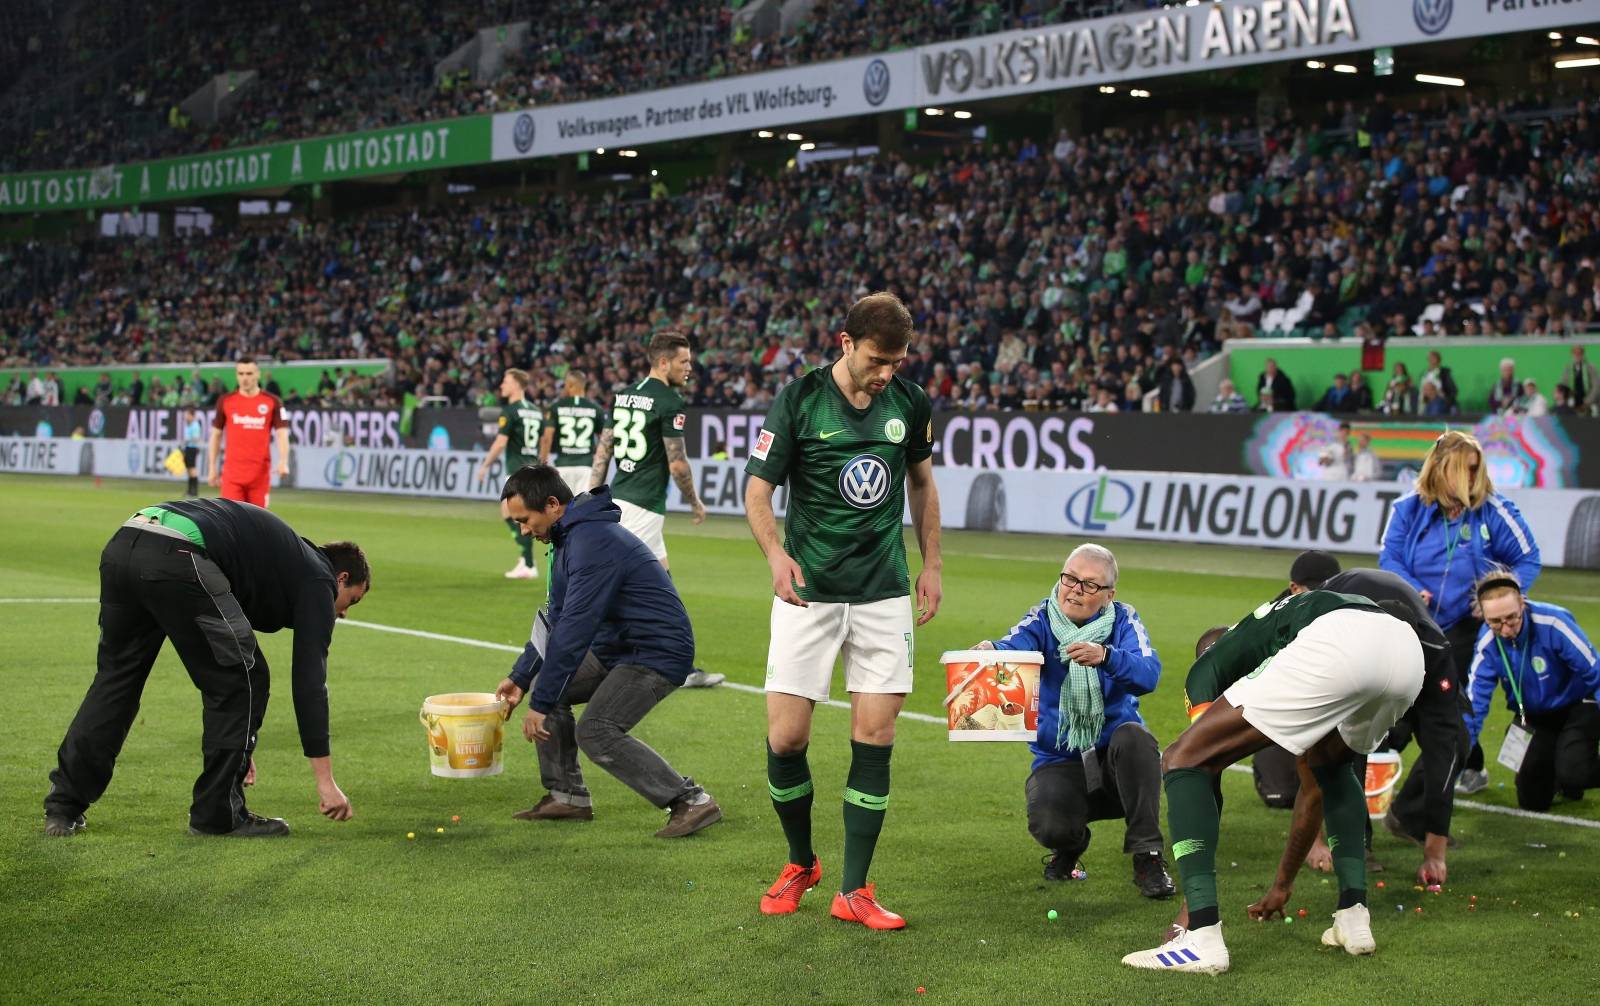 firo: 22.04.2019 Football, Football: 1. Bundesliga VfL Wolfsburg - Eintracht Frankfurt